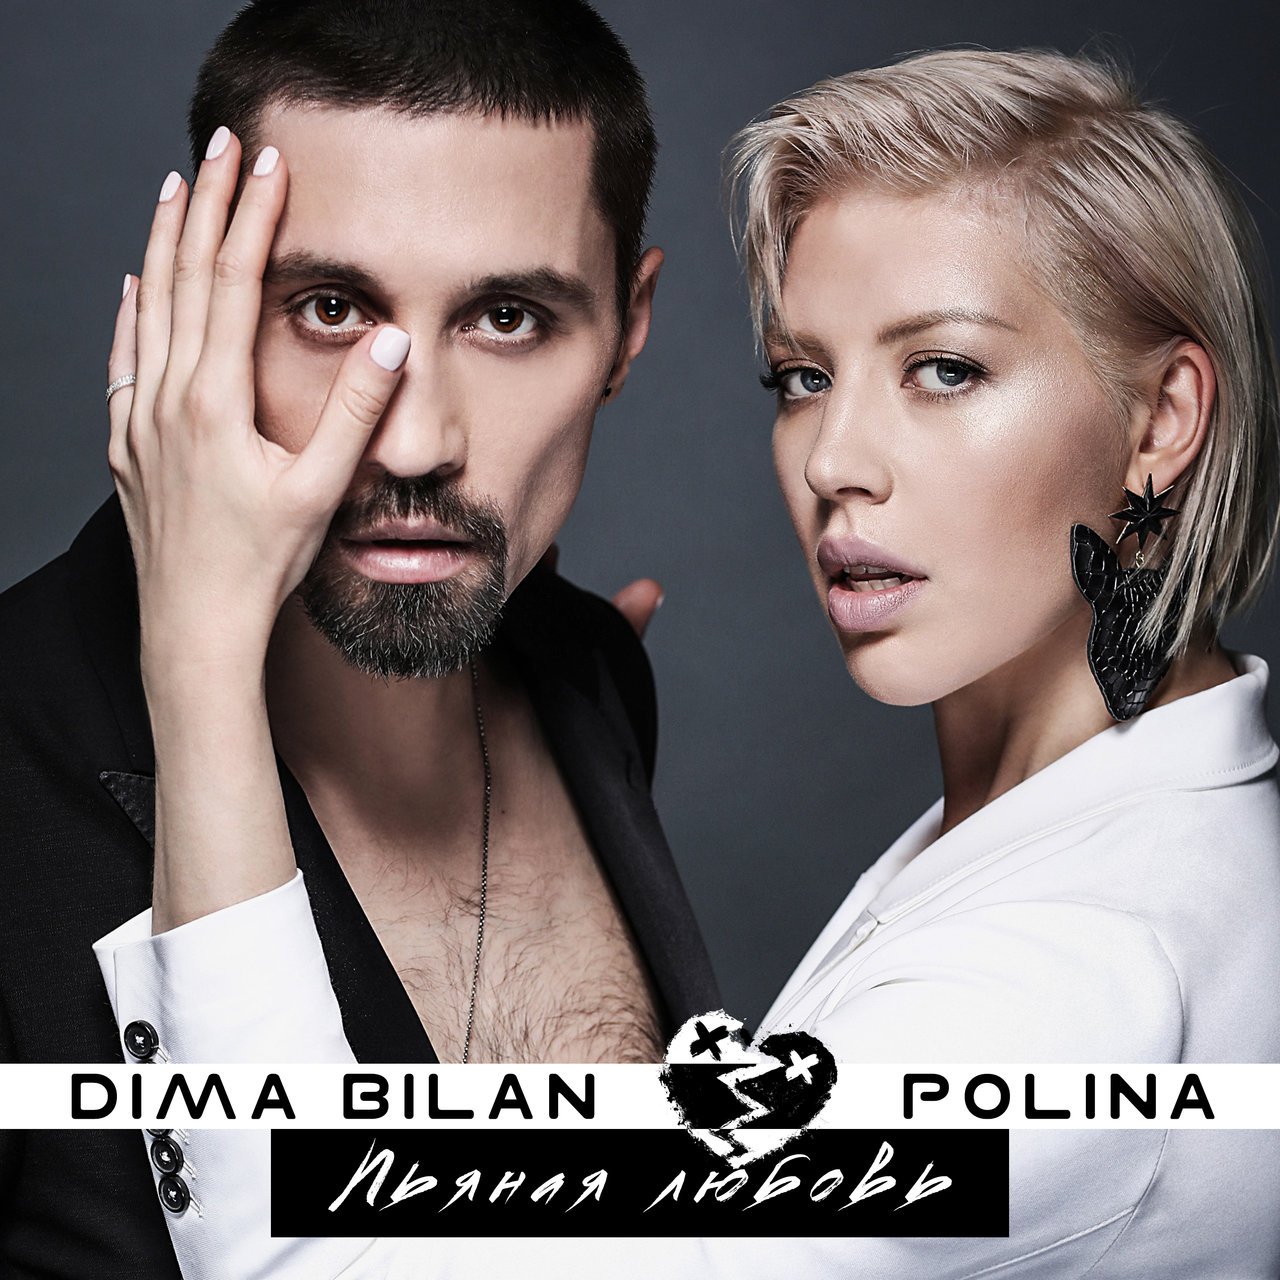 Dima Bilan featuring Polina — Pyanaya lyubov cover artwork